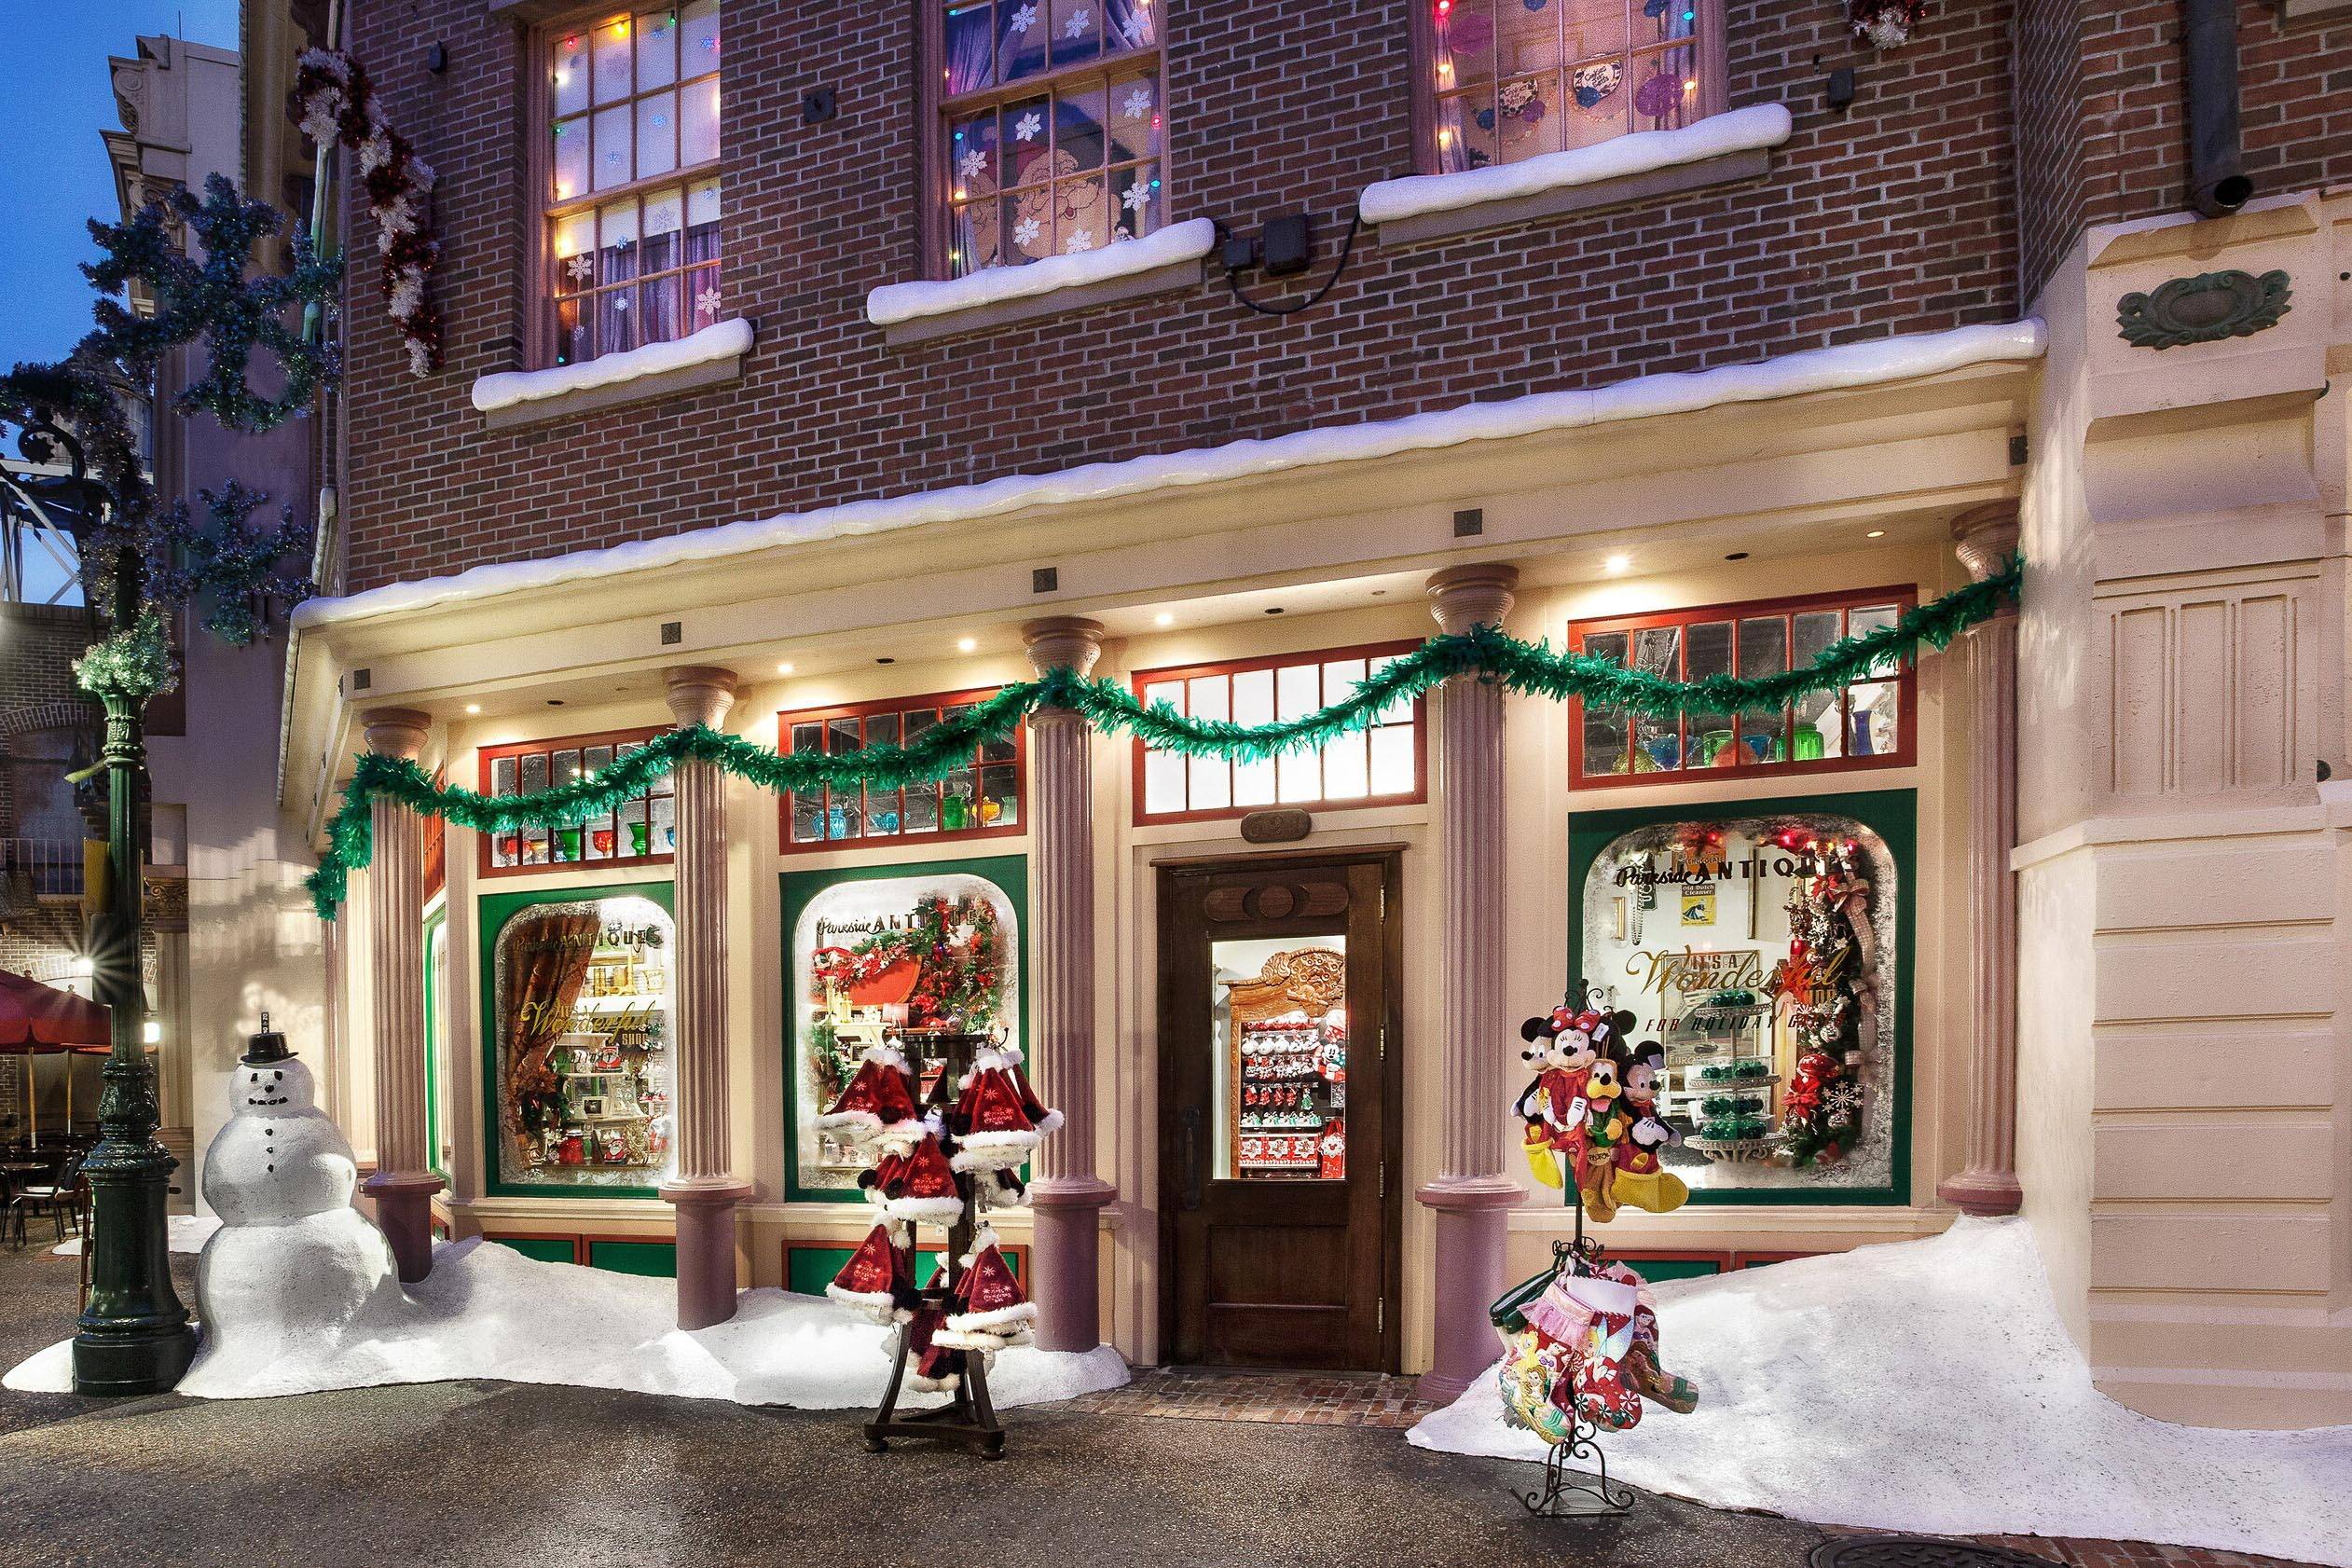 'It's a Wonderful Shop' reopens at Disney's Hollywood Studios as Santa meet and greet